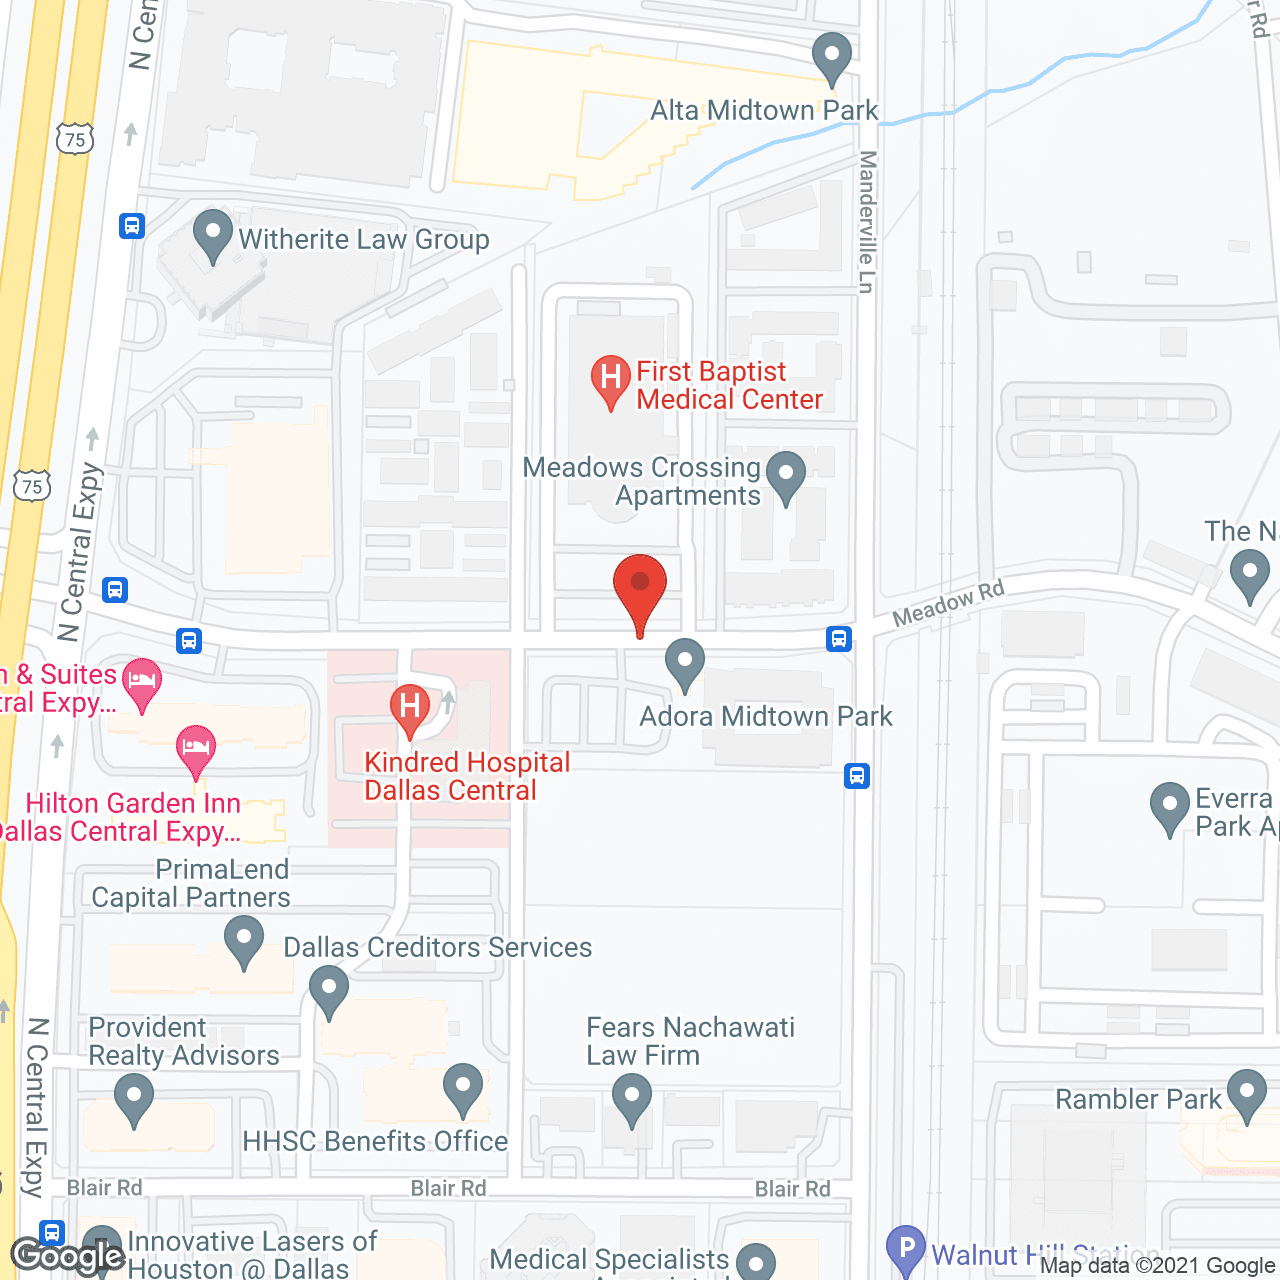 Adora Midtown Park in google map